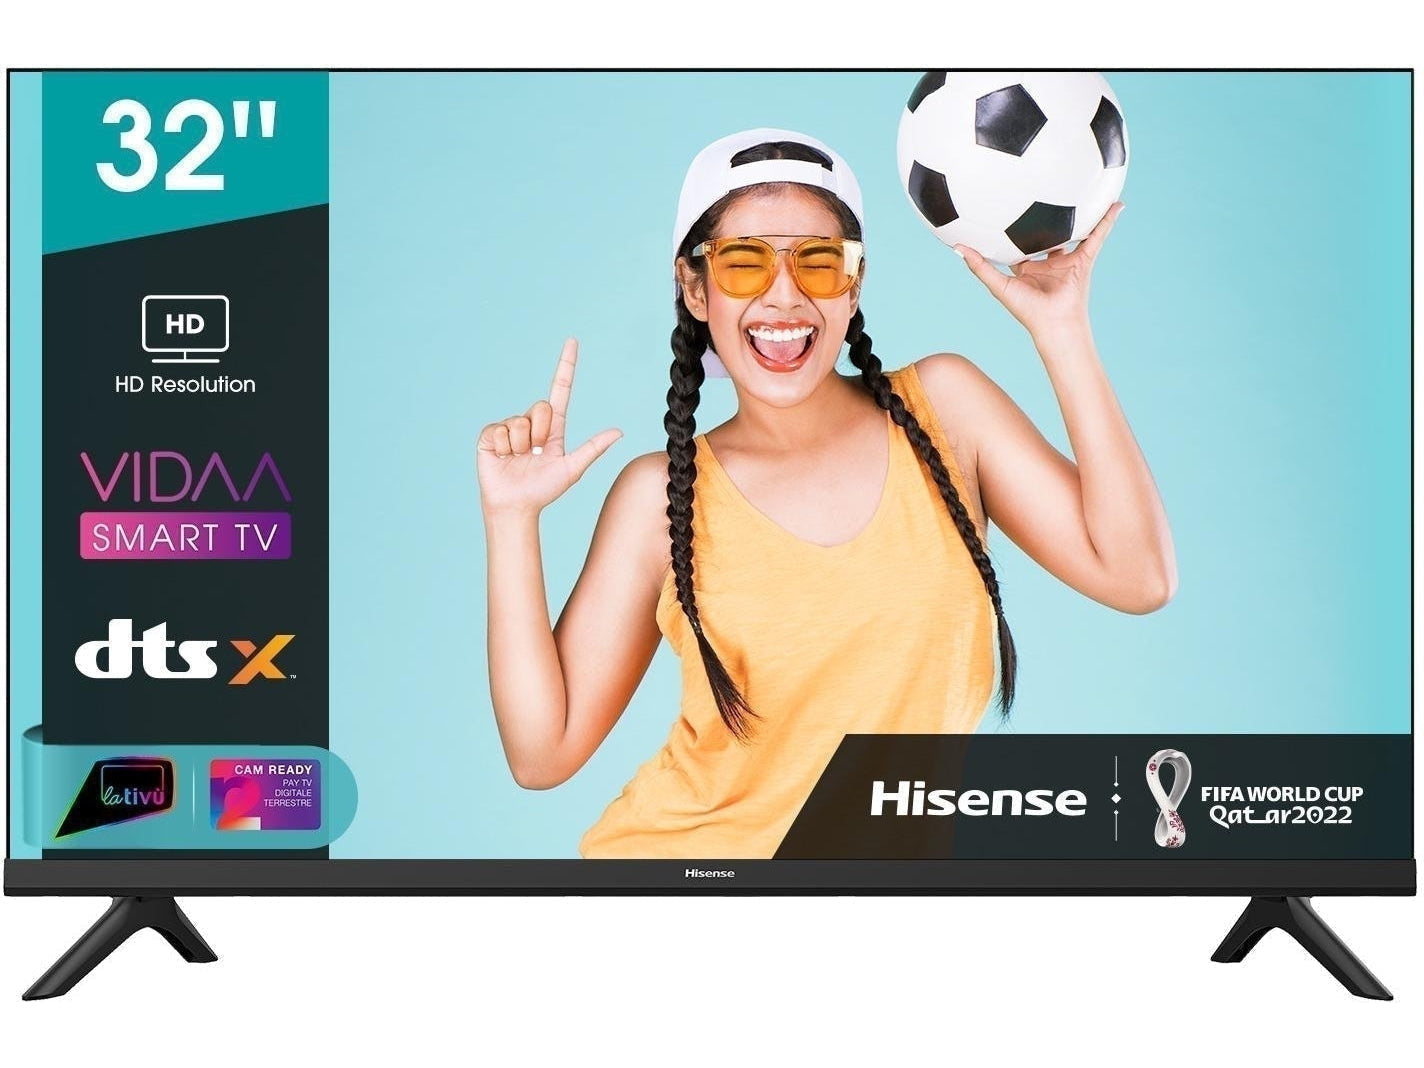 HISENSE SMART TV 32" mod.32A4DG